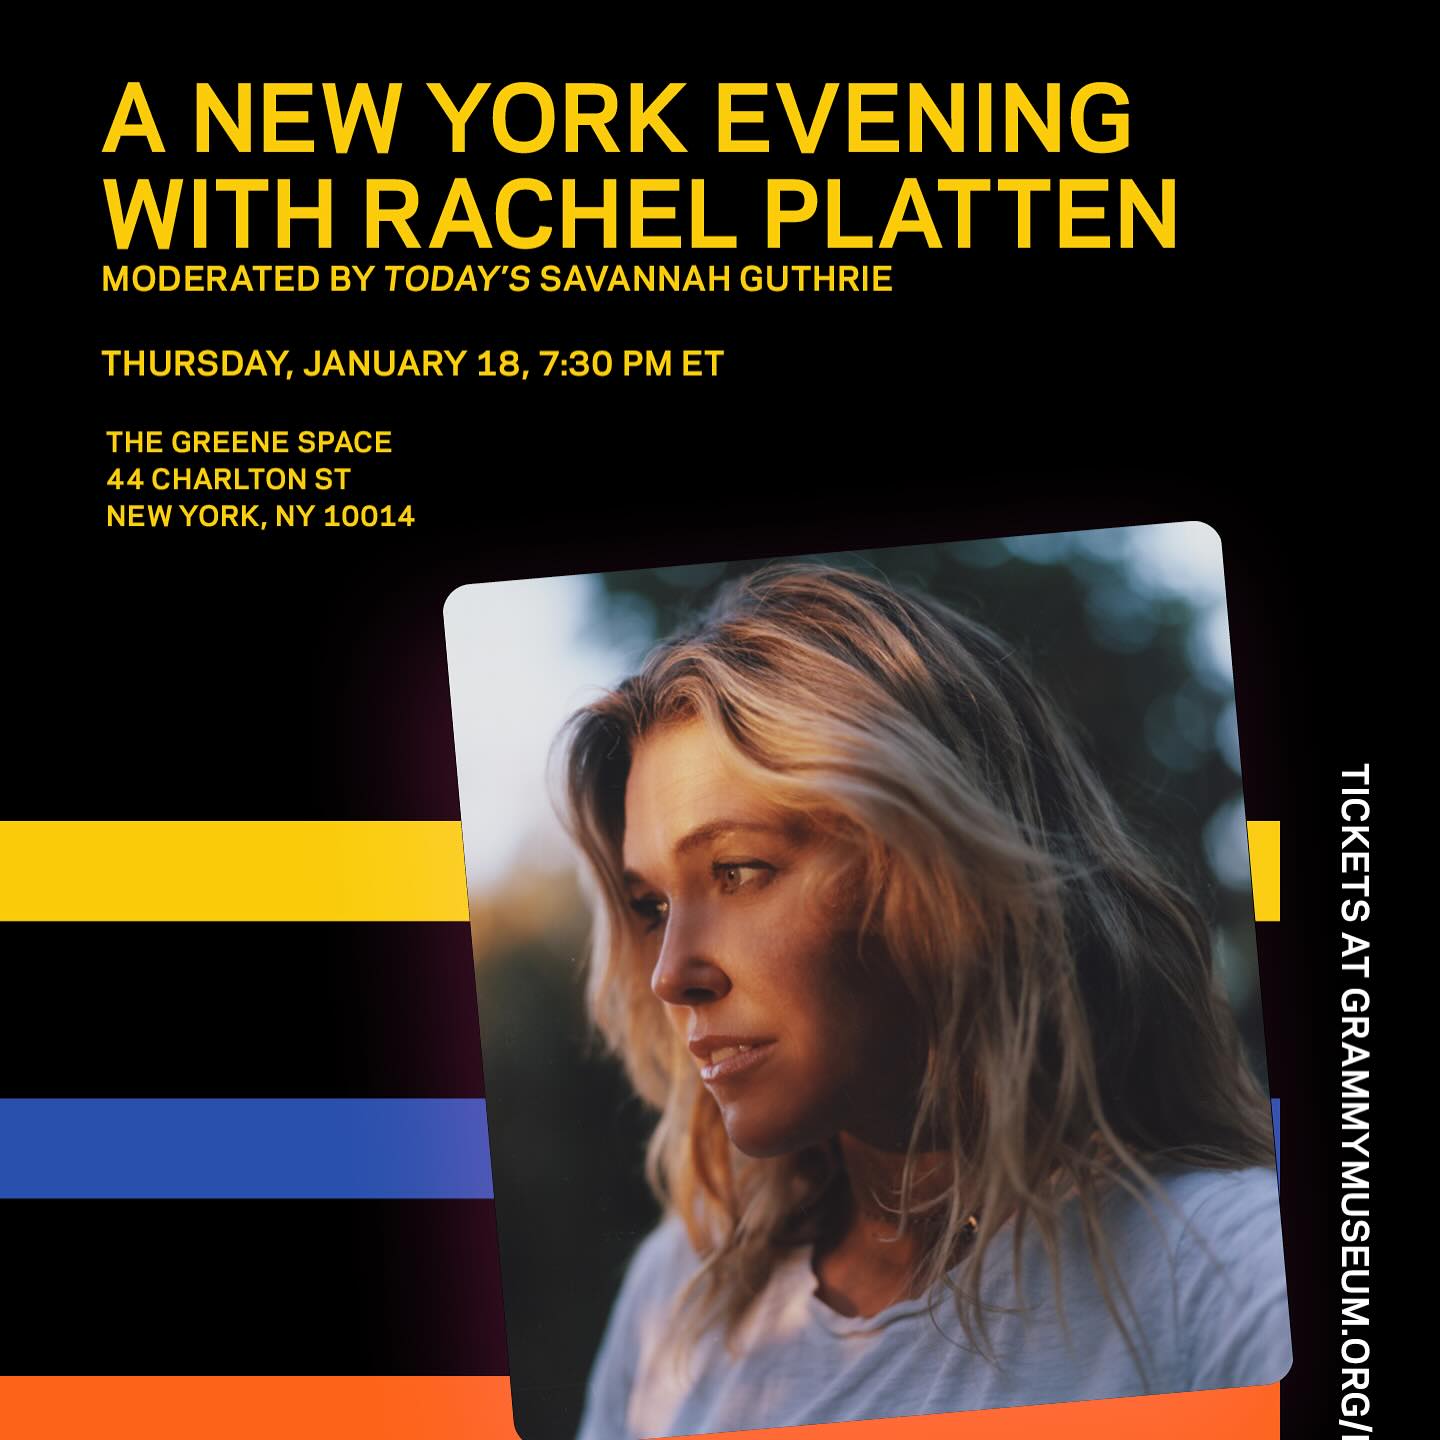 Savannah will be moderating A New York Evening With Rachel Platten tomorrow at 7:30 p.m.